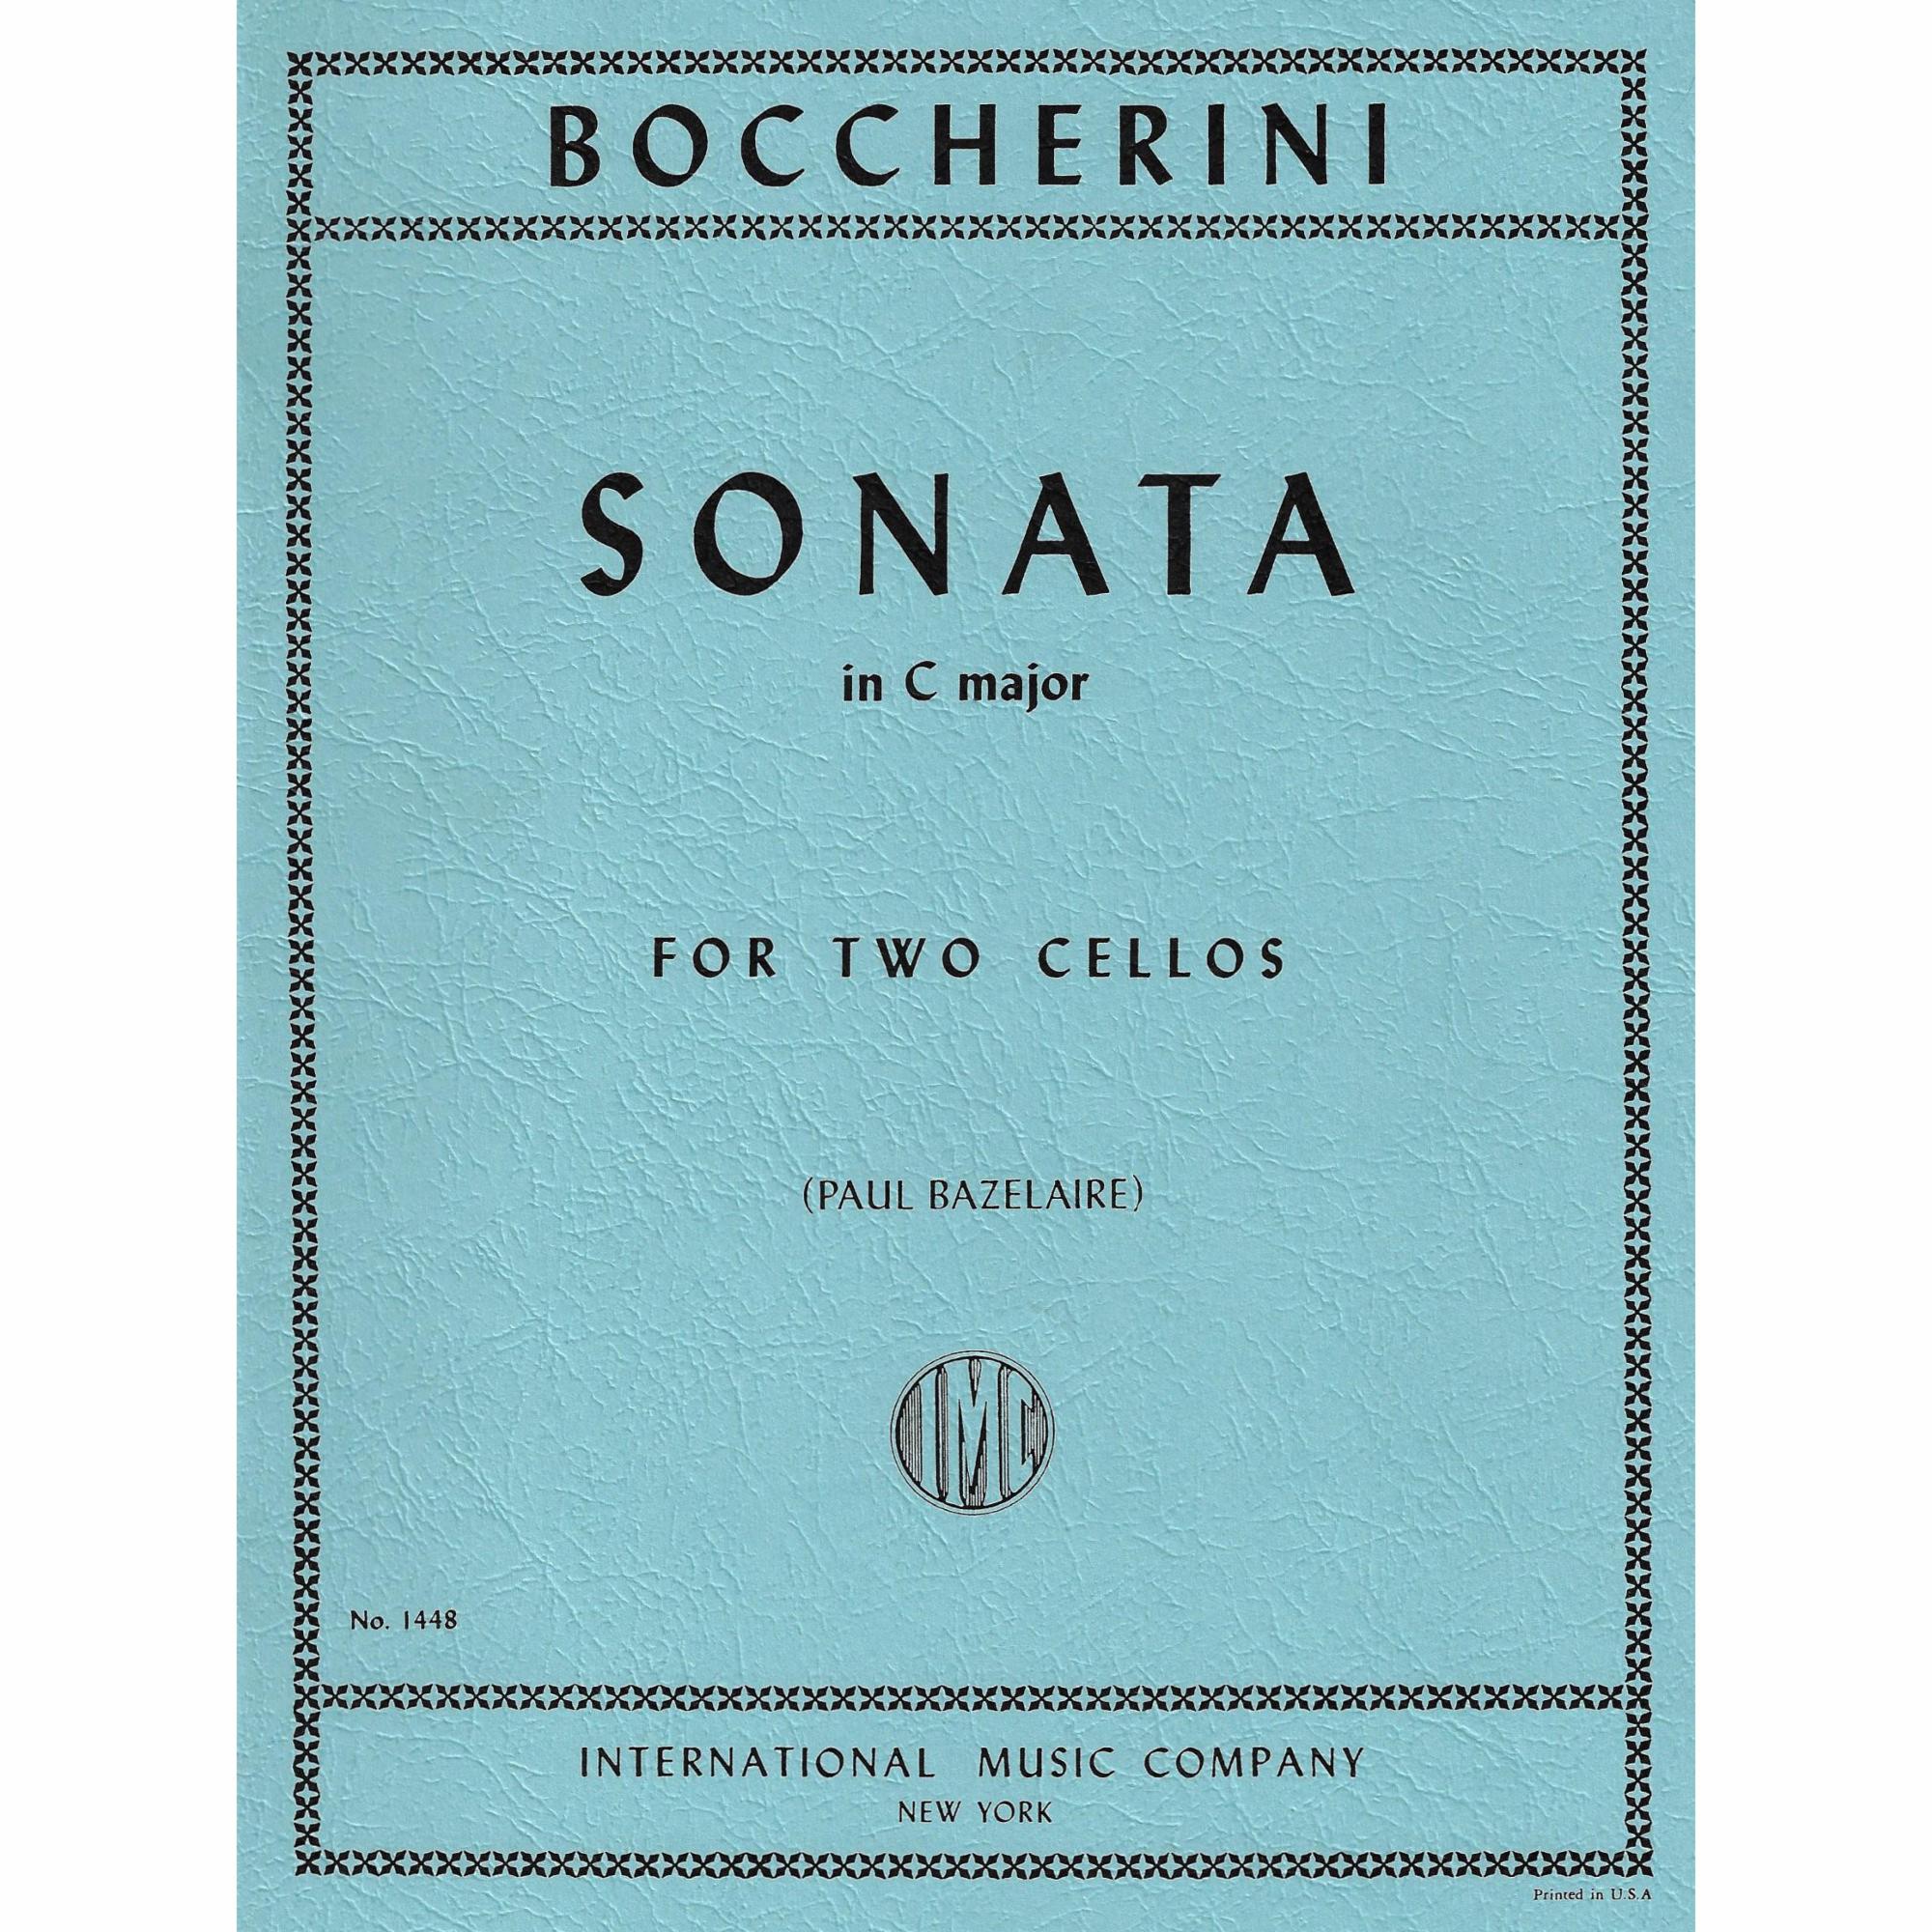 Boccherini -- Sonata in C Major for Two Cellos